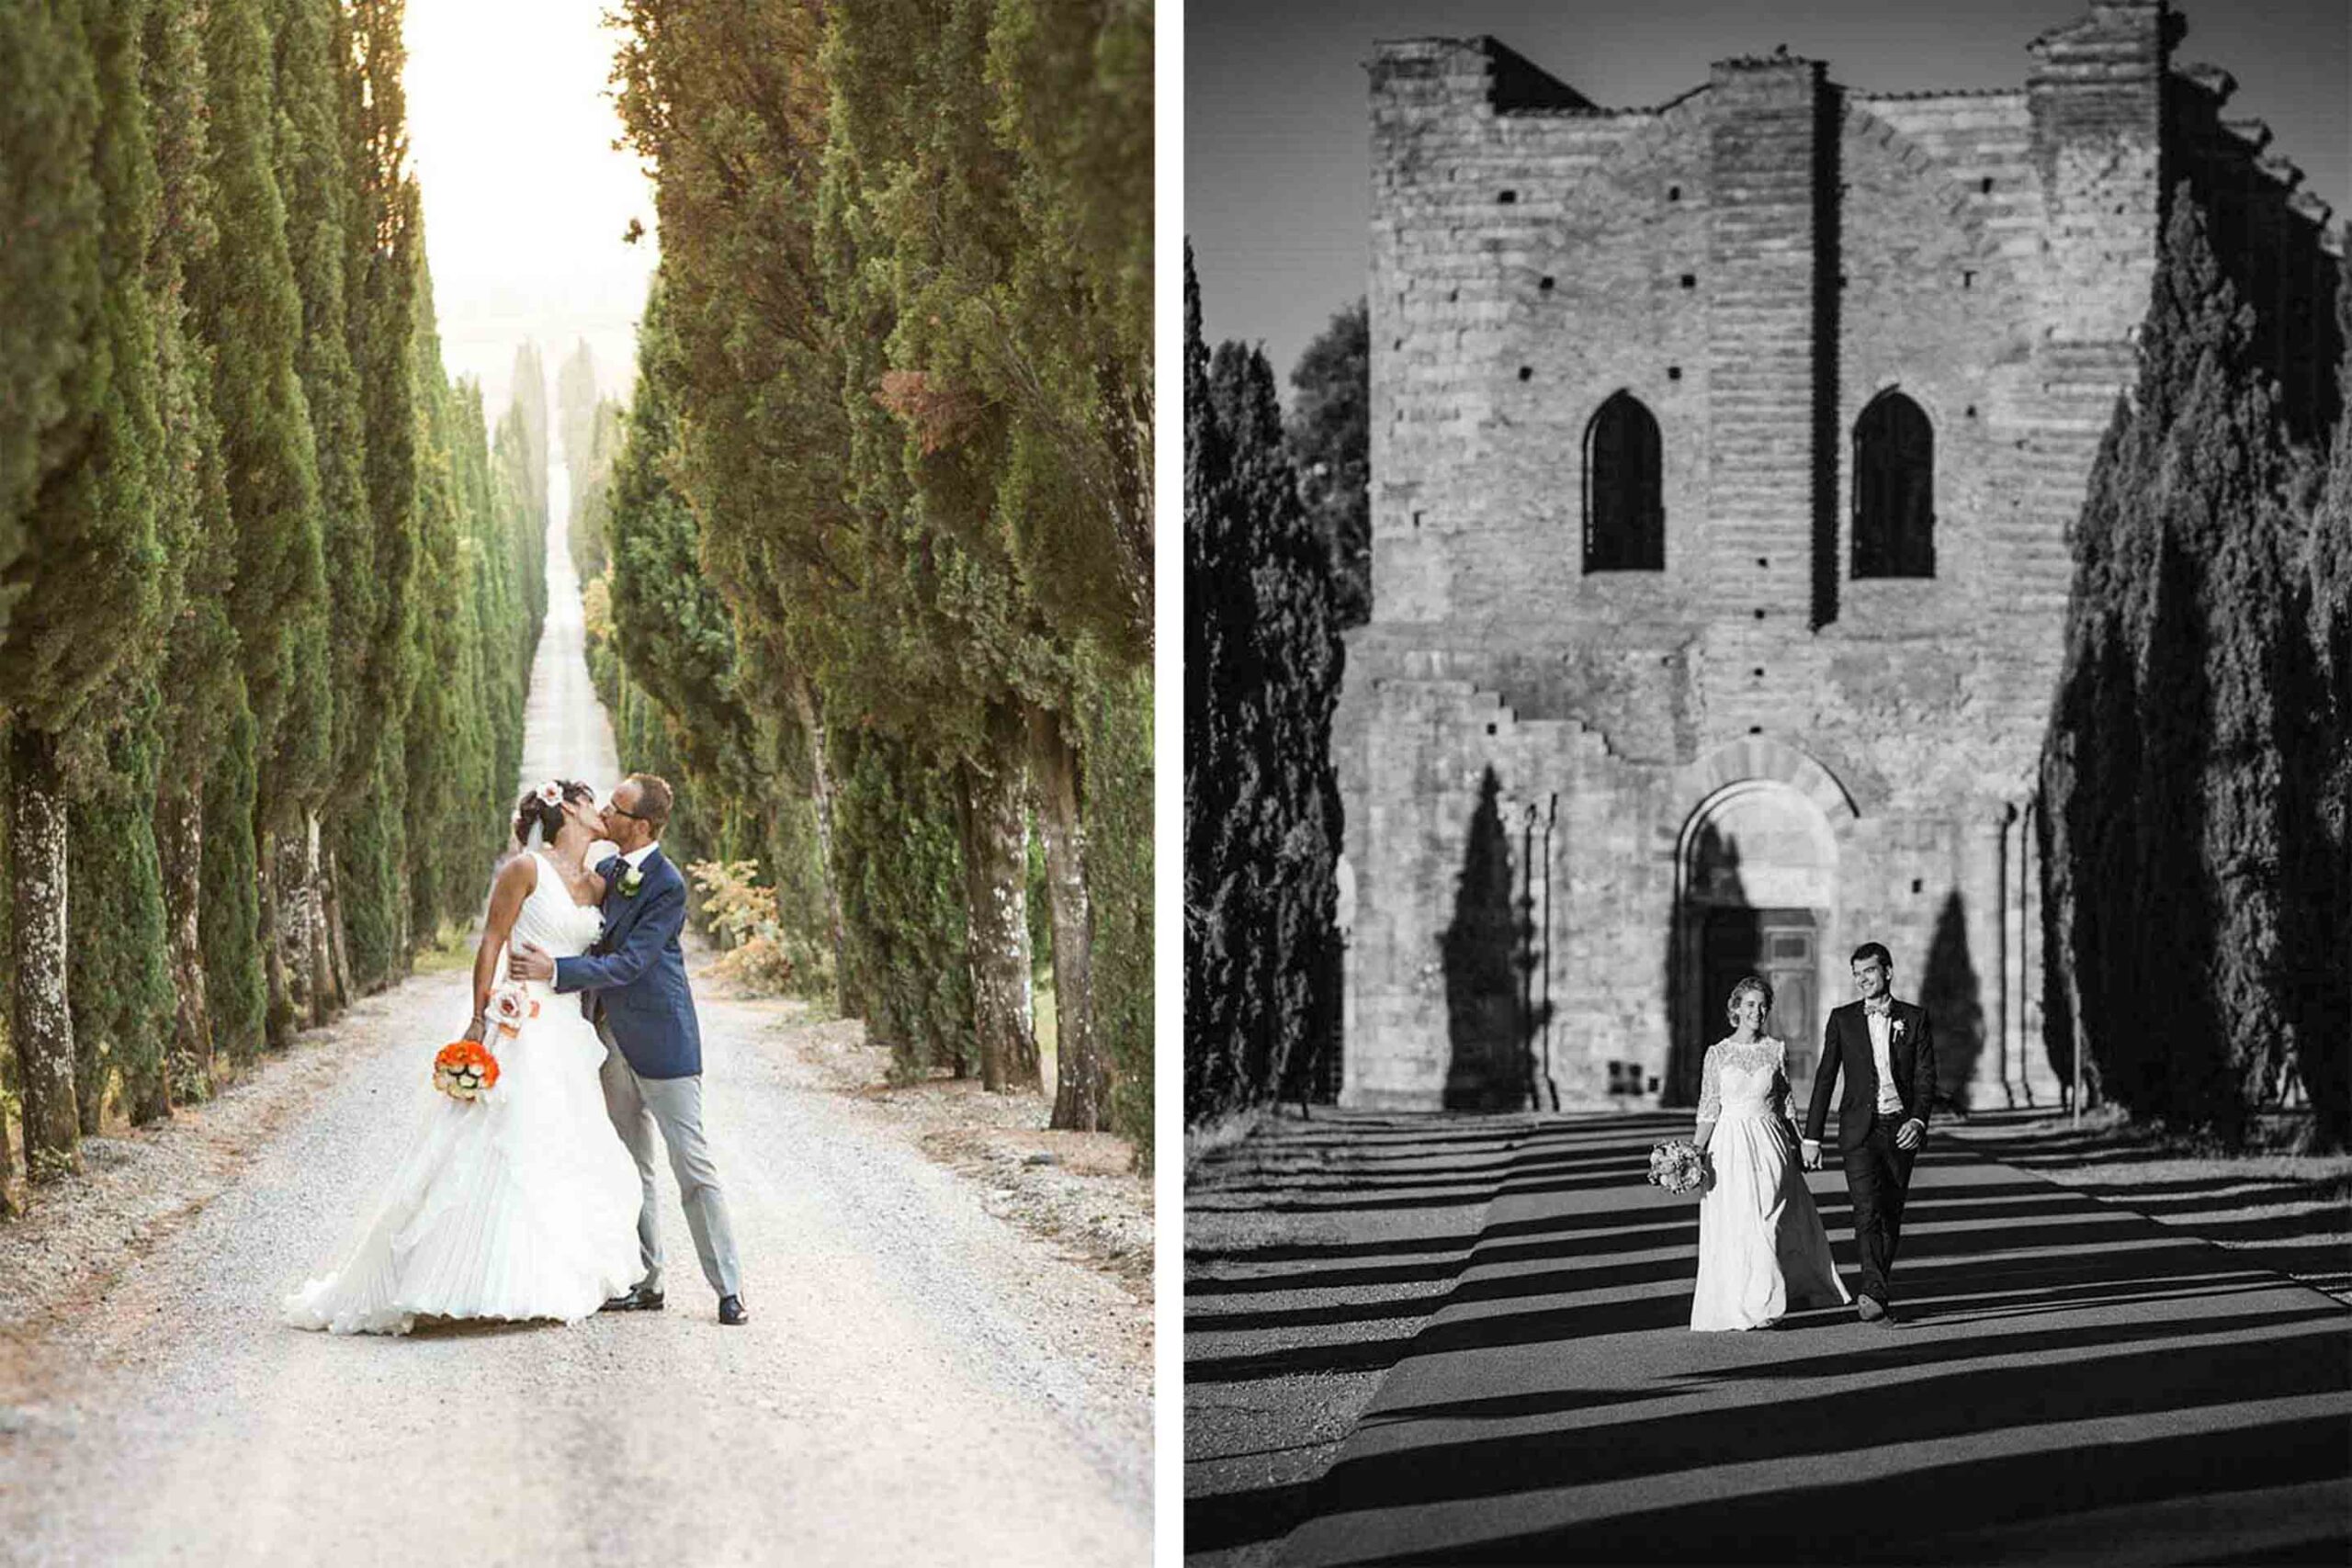 Italy wedding photographer